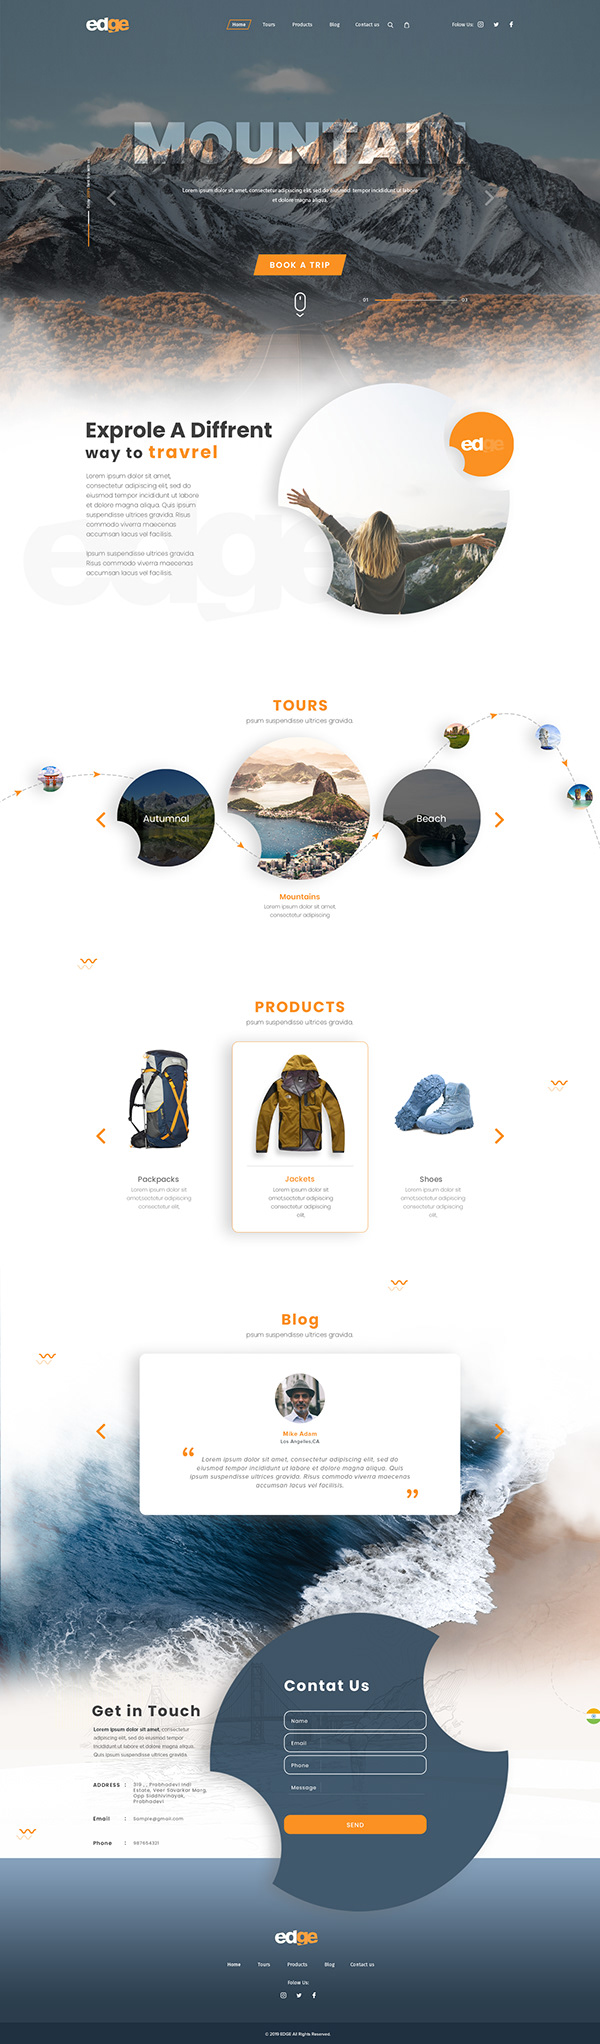 Edge Travel website design concept